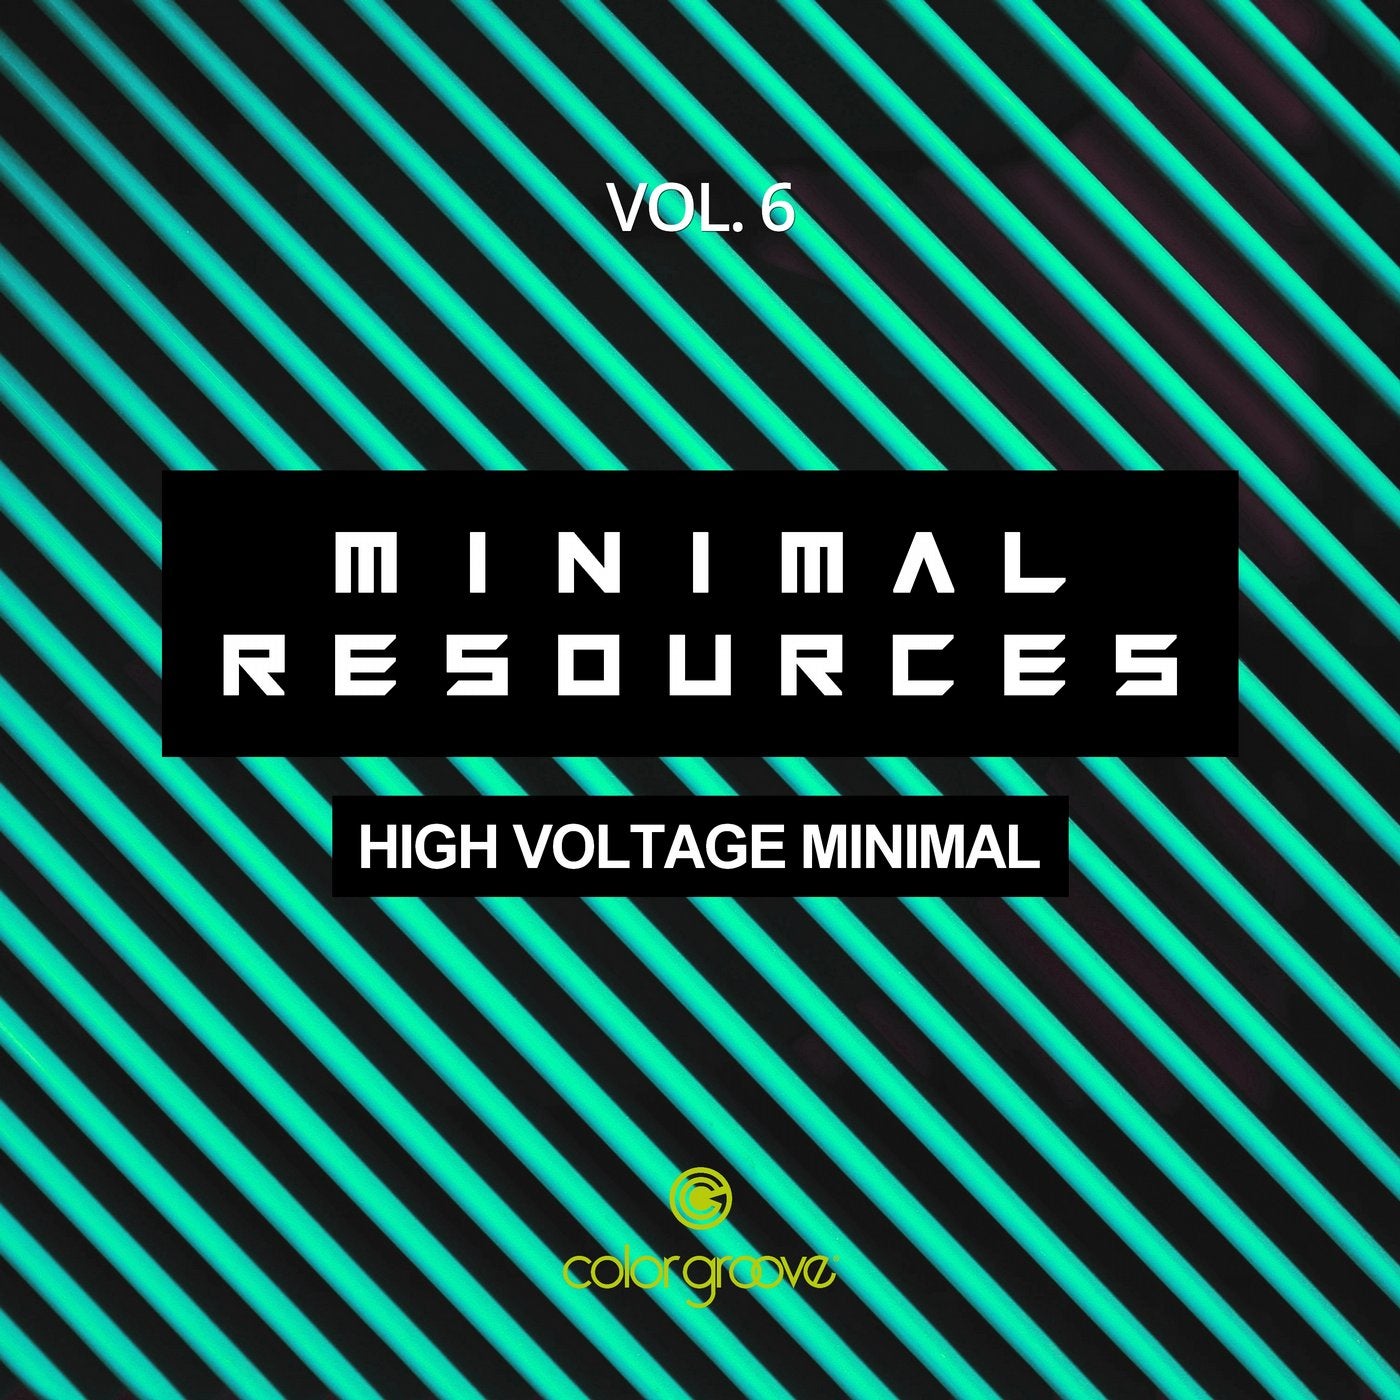 Minimal Resources, Vol. 6 (High Voltage Minimal)